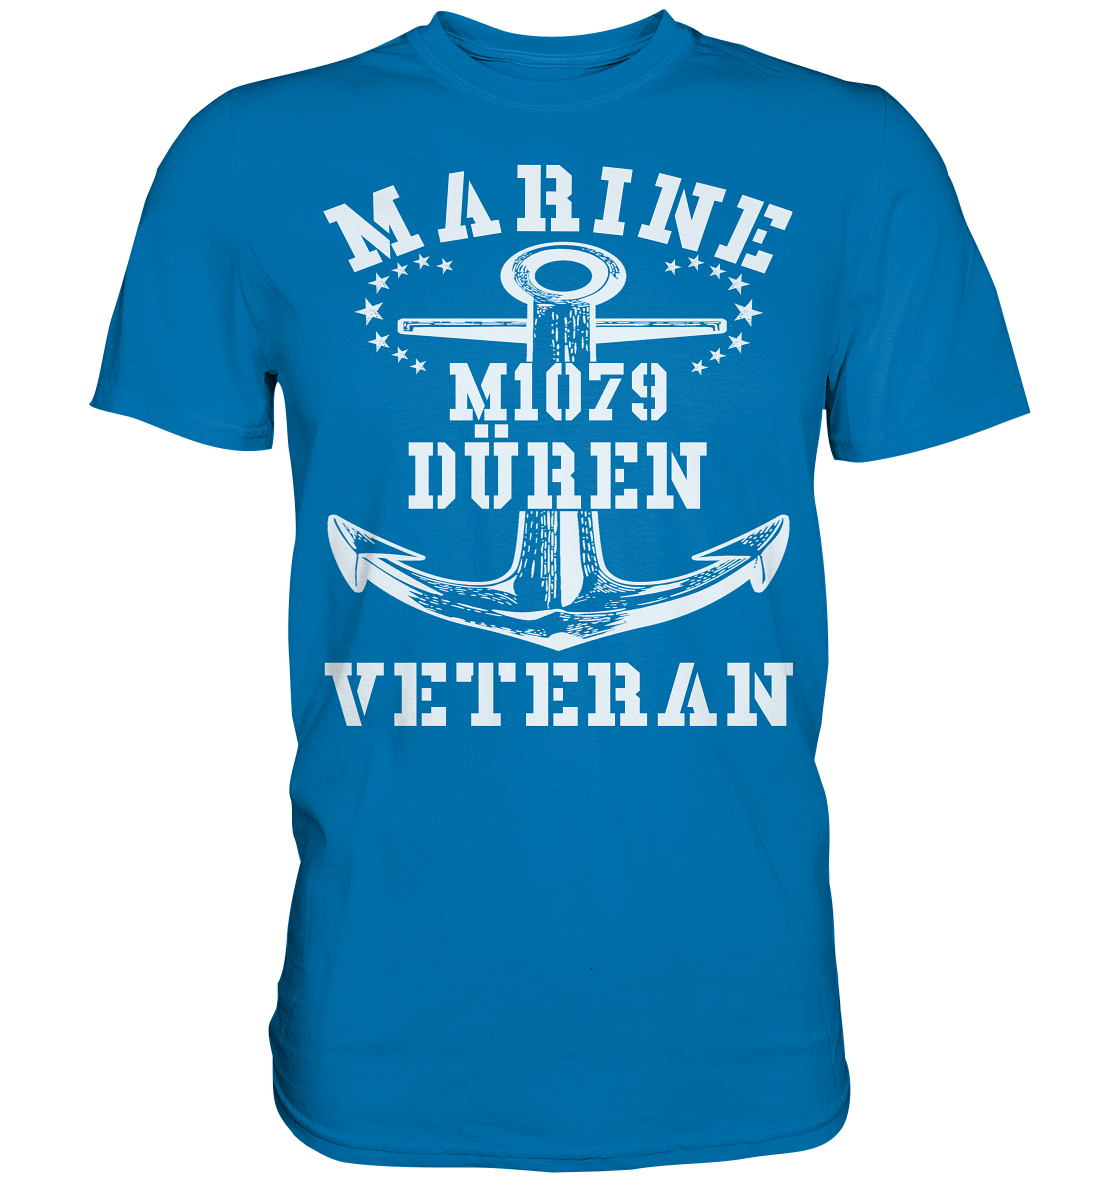 MARINE VETERAN M1079 DÜREN - Premium Shirt